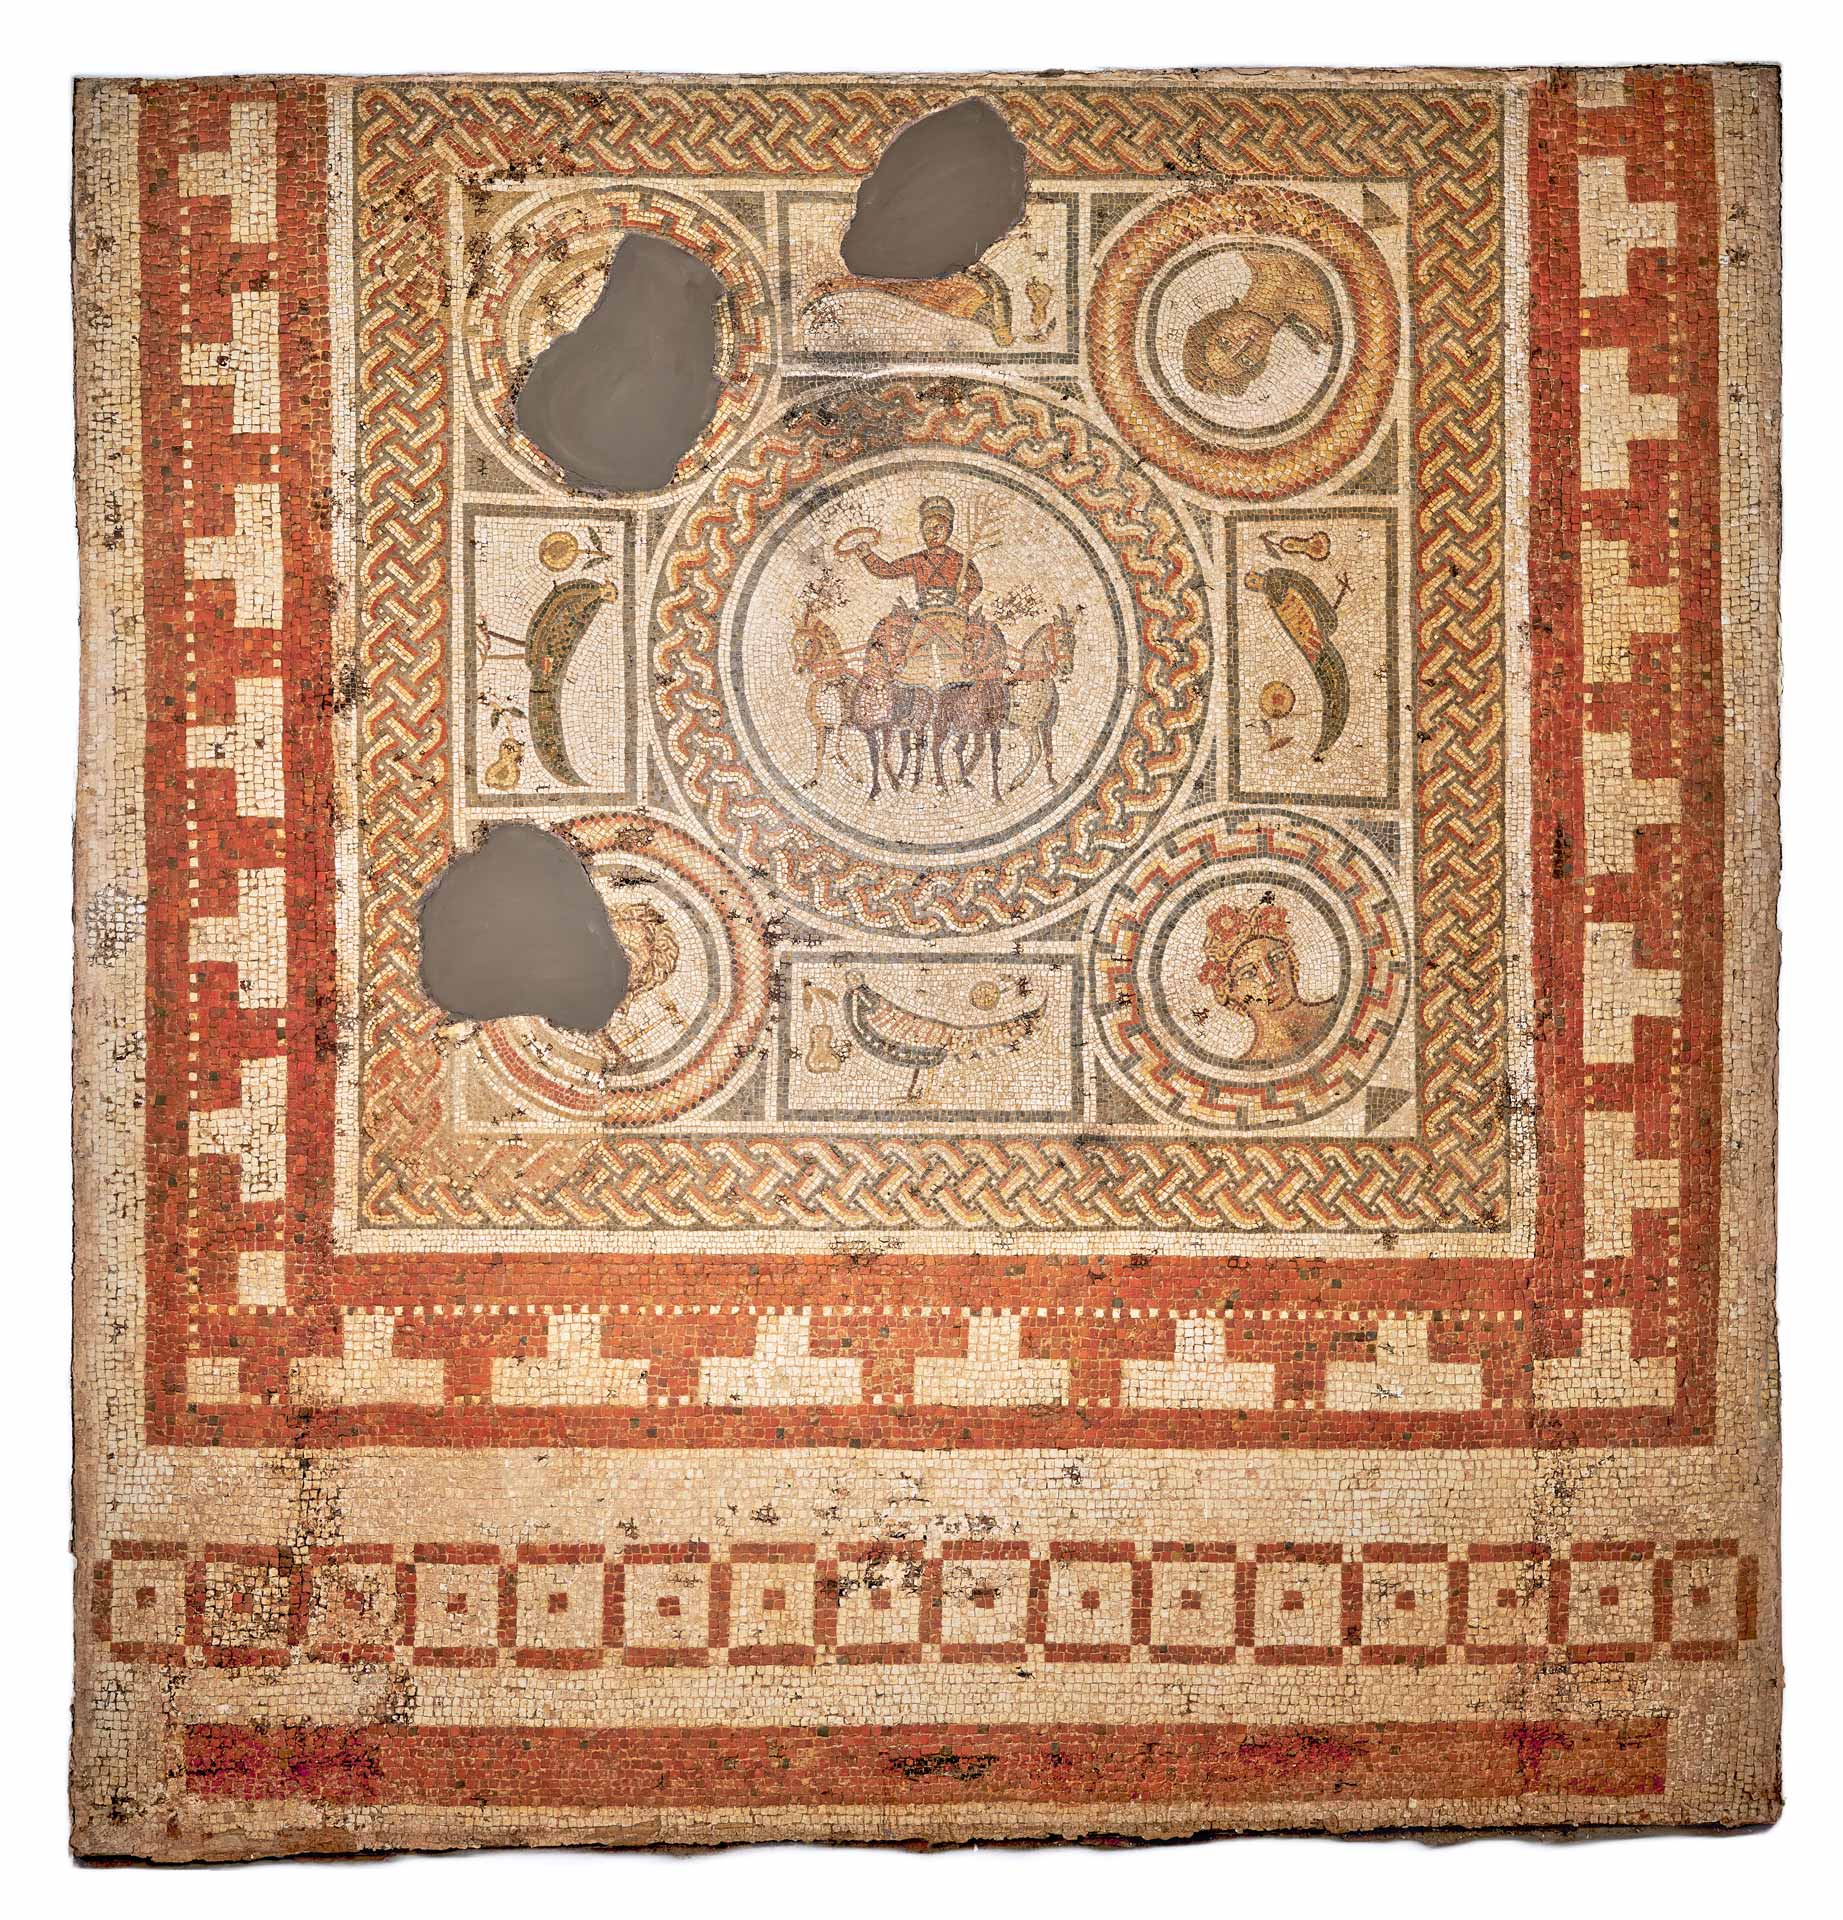 Rudston charioteer mosaic